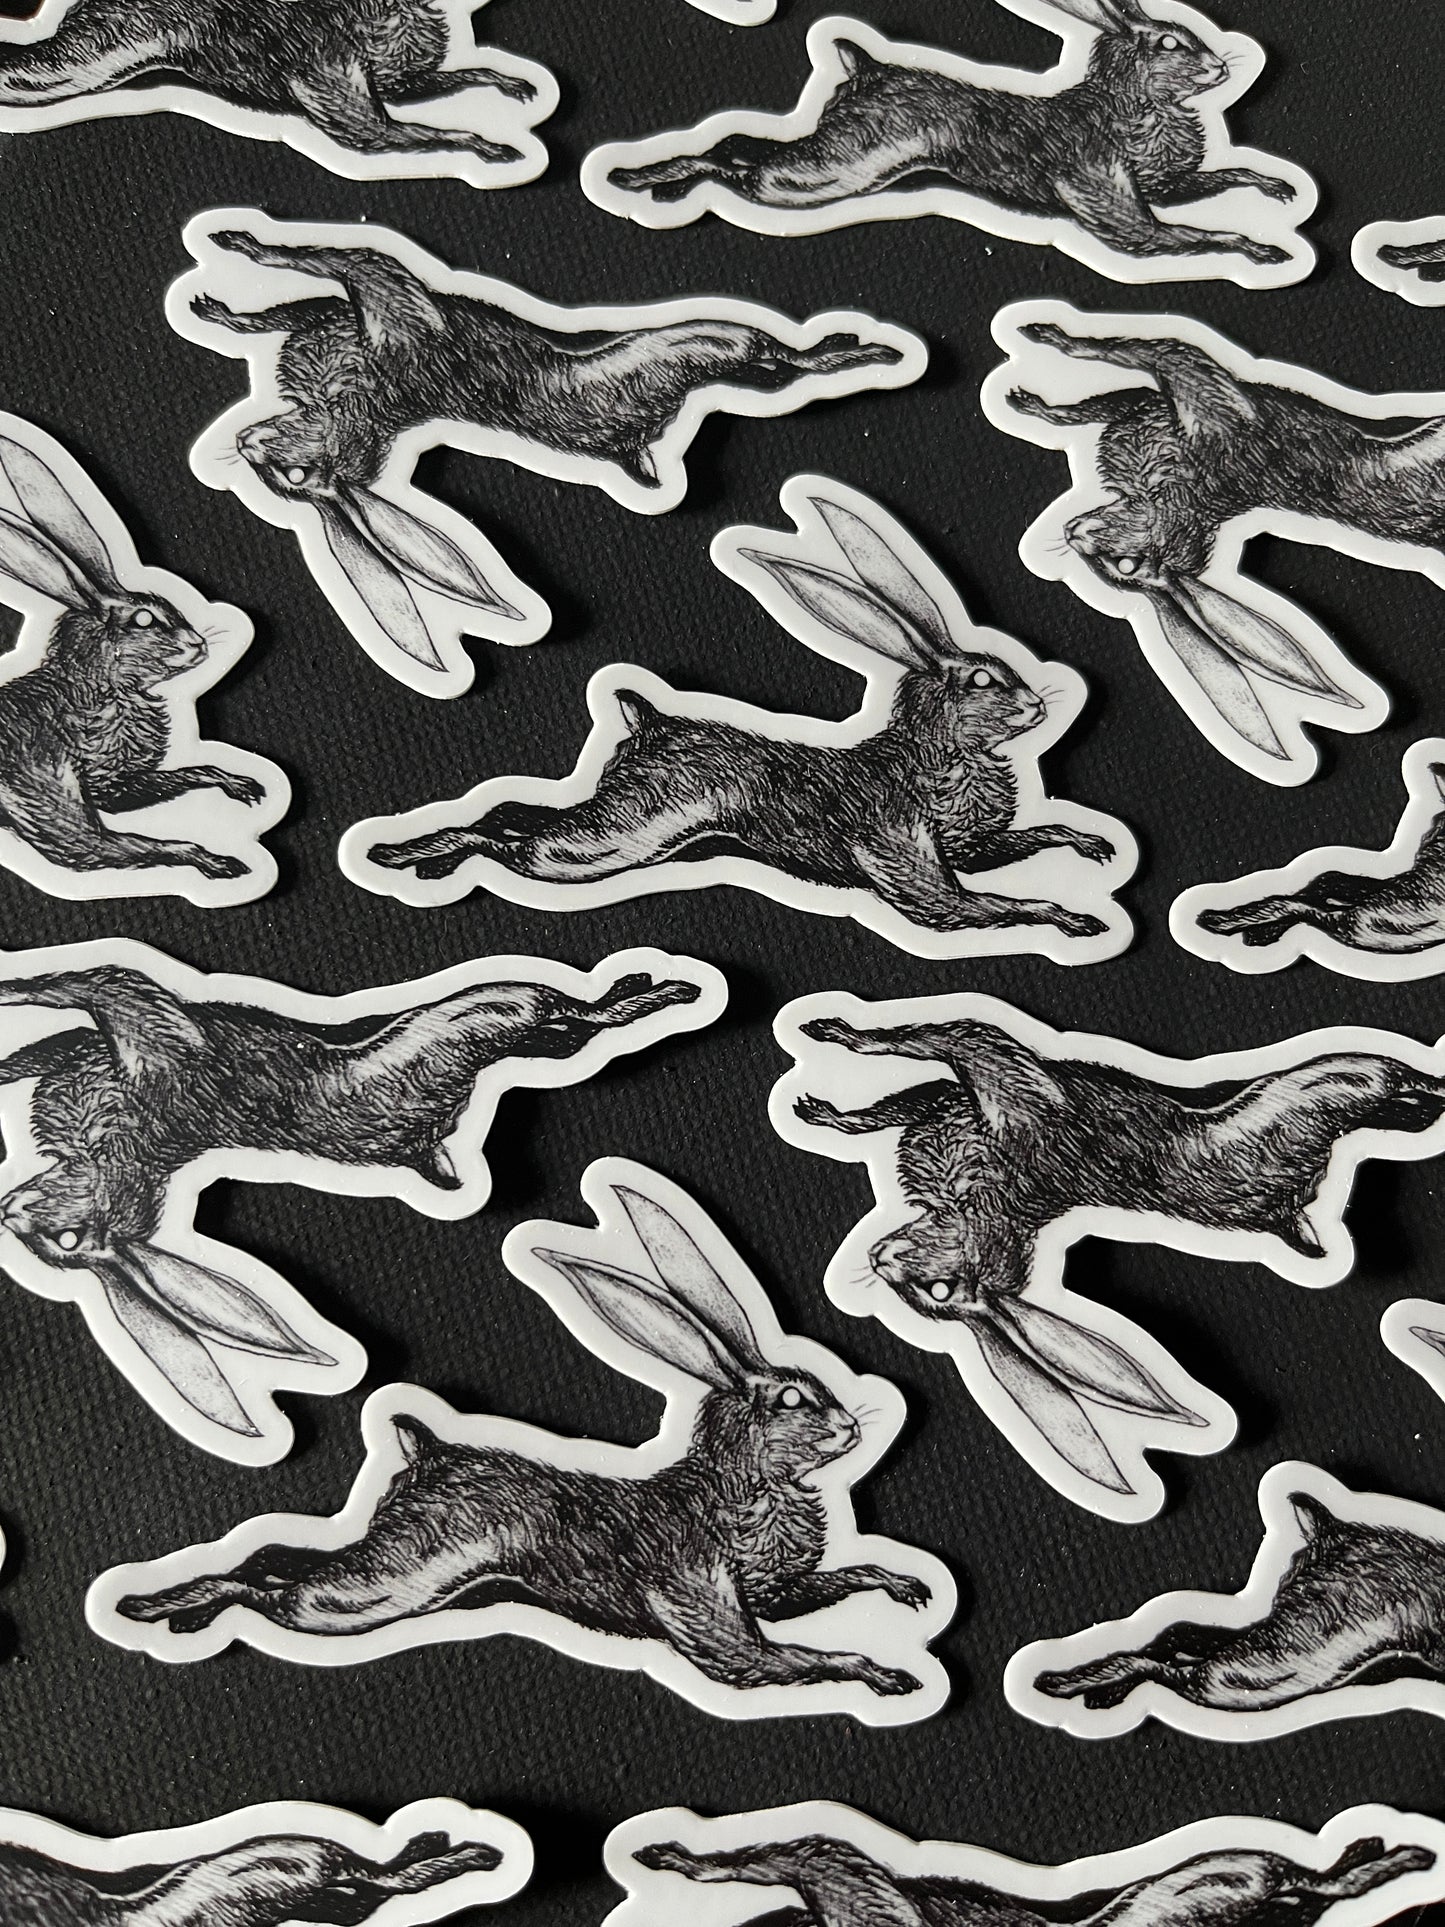 Hare vinyl sticker